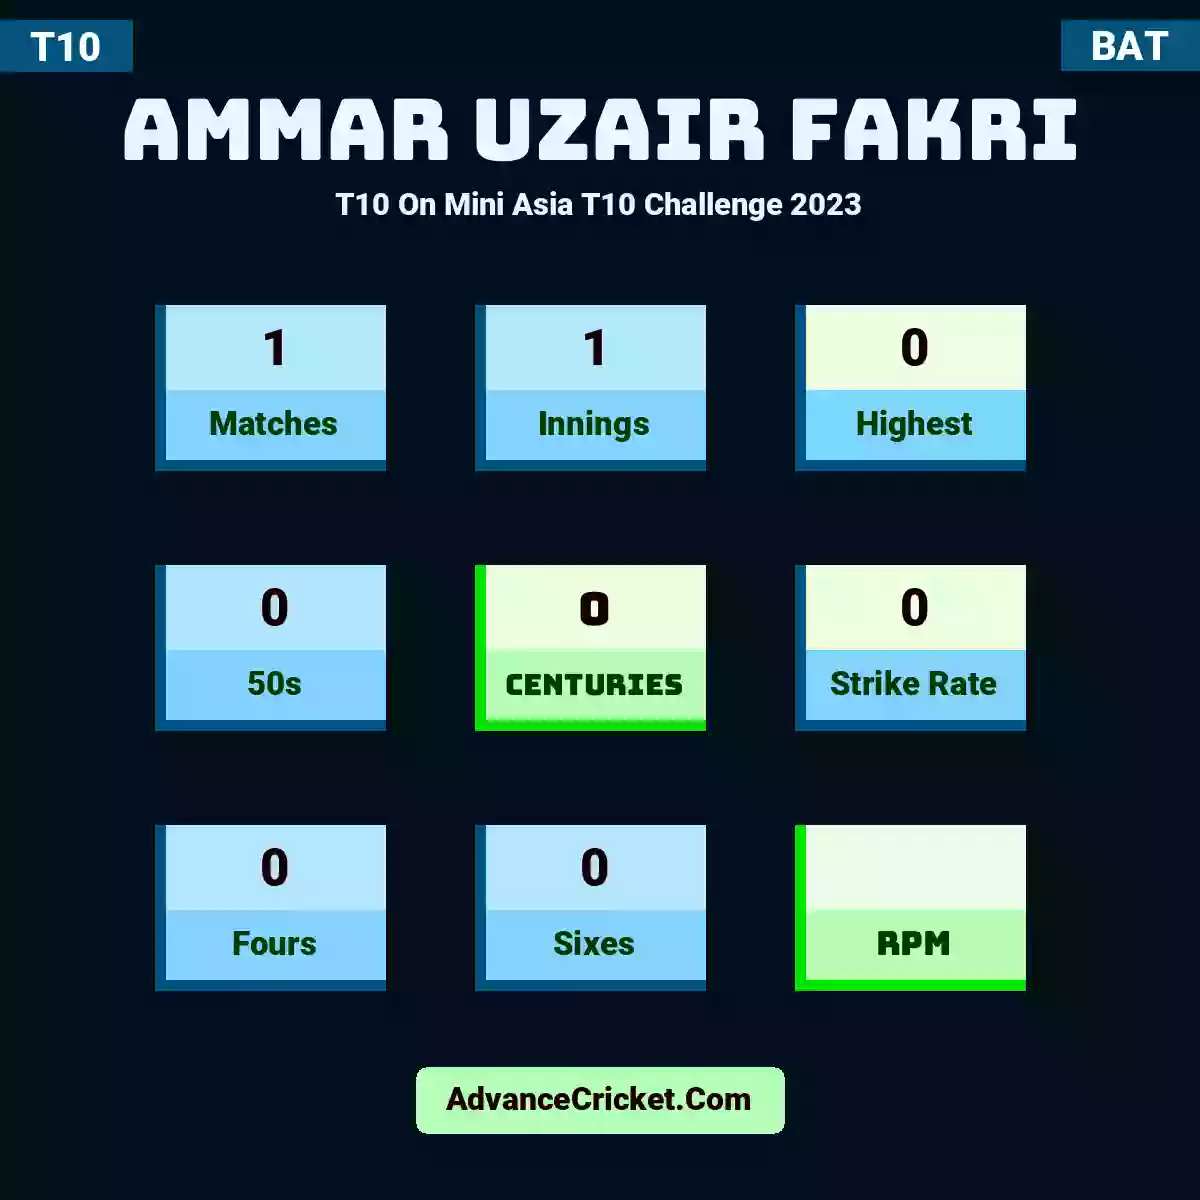 Ammar Uzair Fakri T10  On Mini Asia T10 Challenge 2023, Ammar Uzair Fakri played 1 matches, scored 0 runs as highest, 0 half-centuries, and 0 centuries, with a strike rate of 0. A.Uzair.Fakri hit 0 fours and 0 sixes.